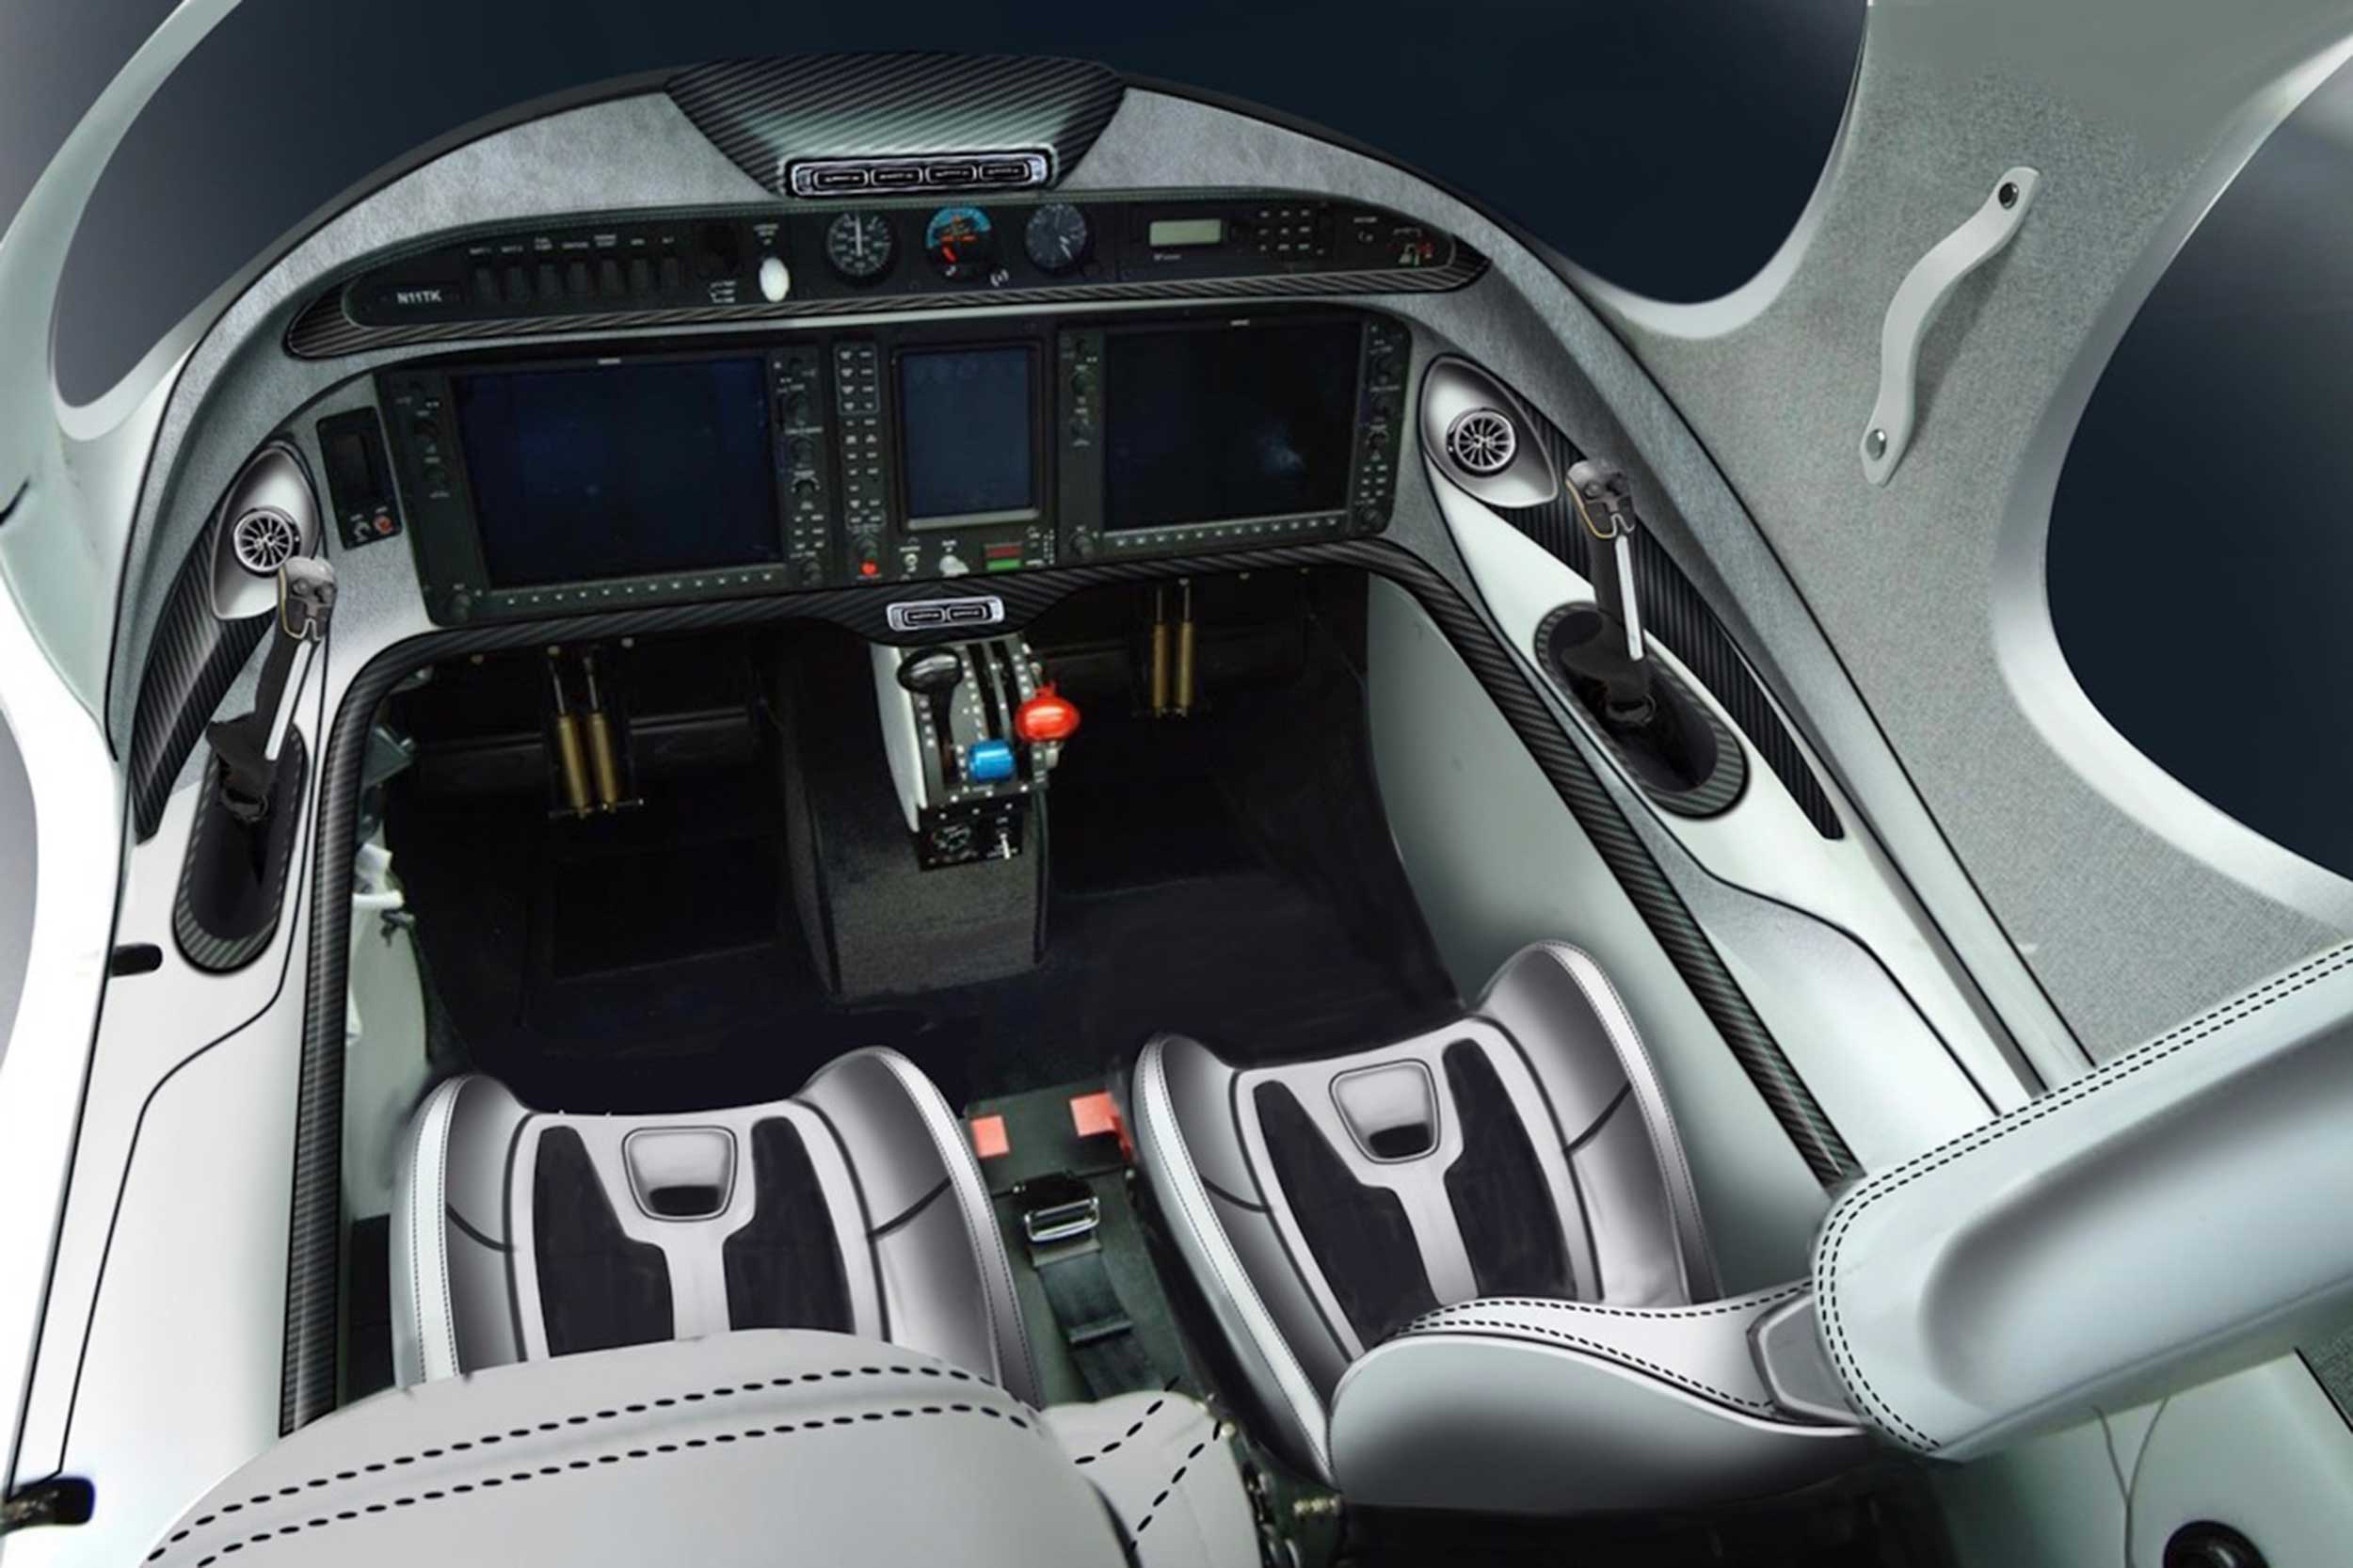 JMB's new interior for the four-seat Evo